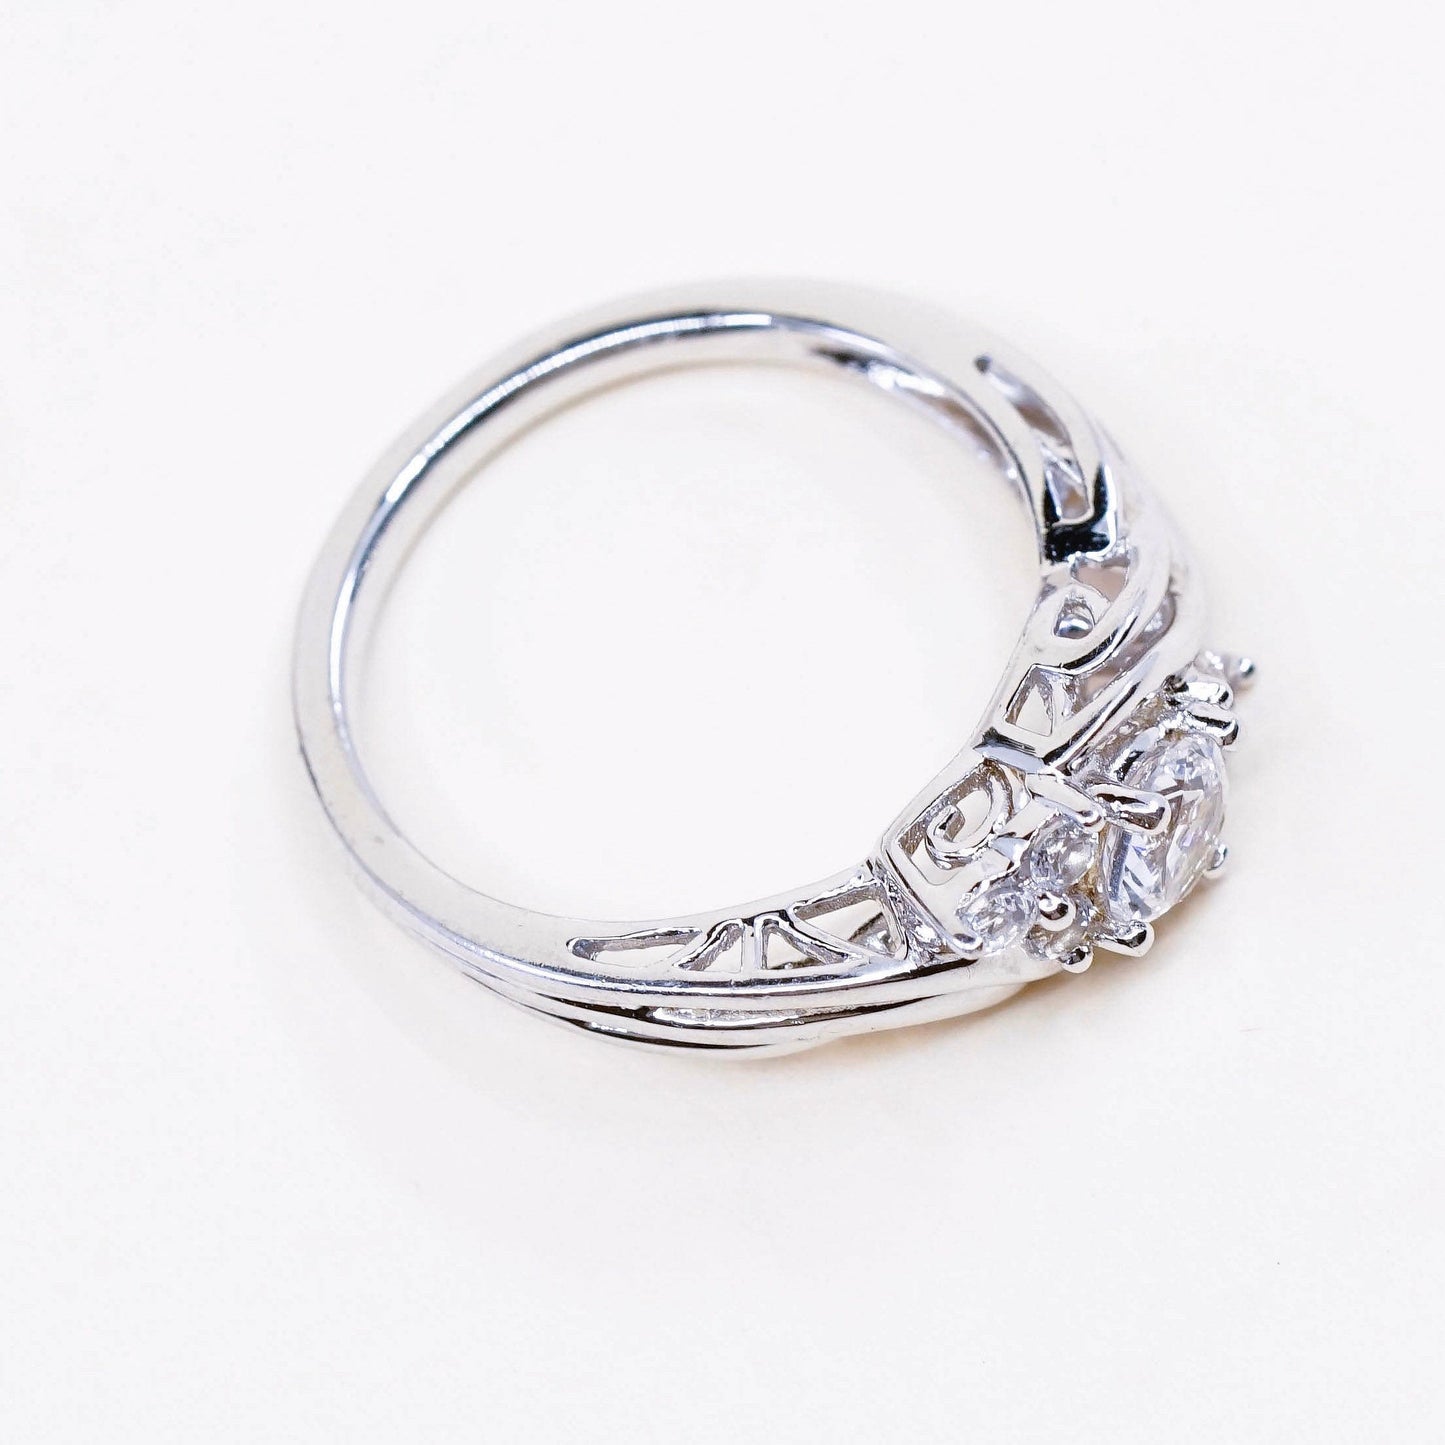 Size 7, Vintage handmade sterling silver princess cut crystal ring